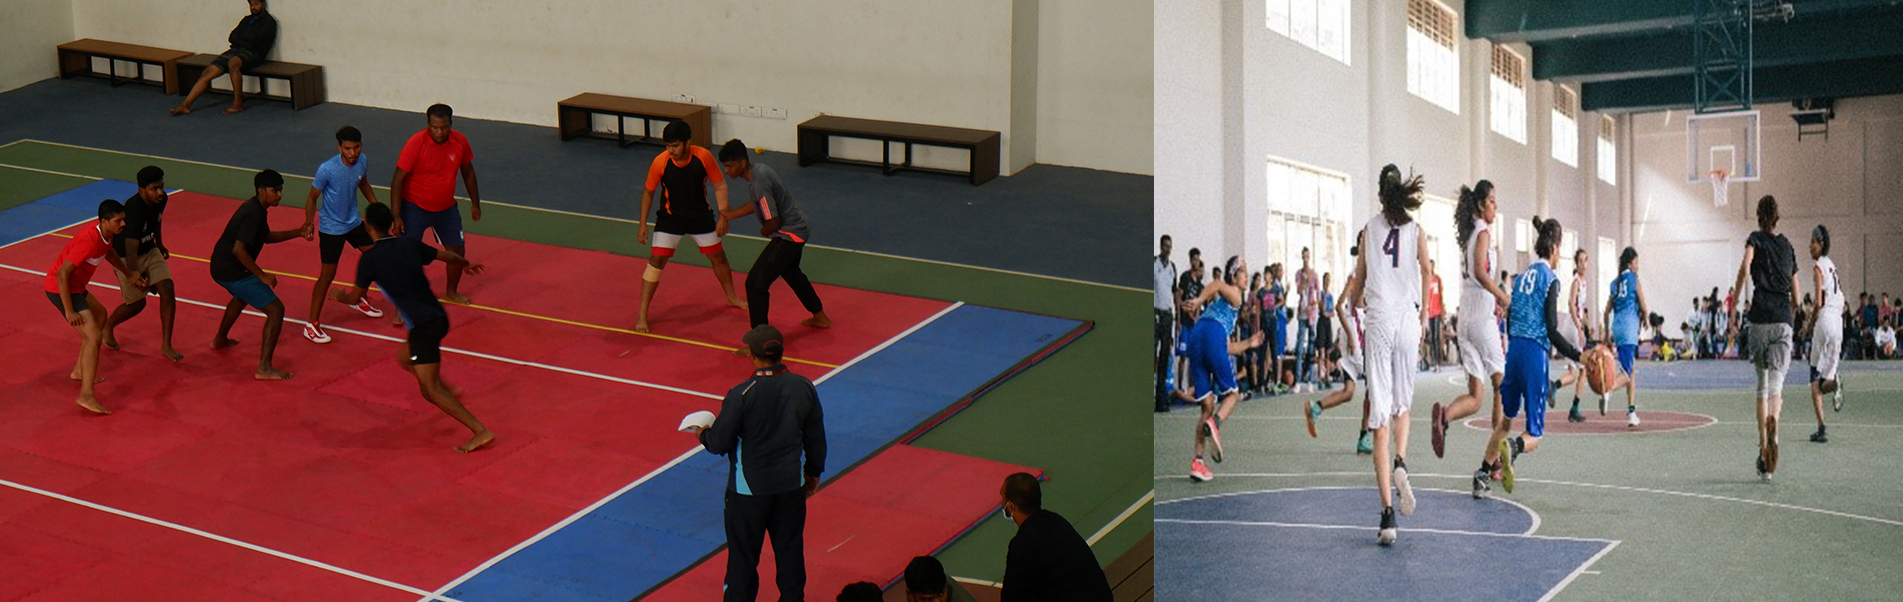 Magis Block Ground Floor - multipurpose indoor court for Basket Ball, Kabaddi and Throw Ball